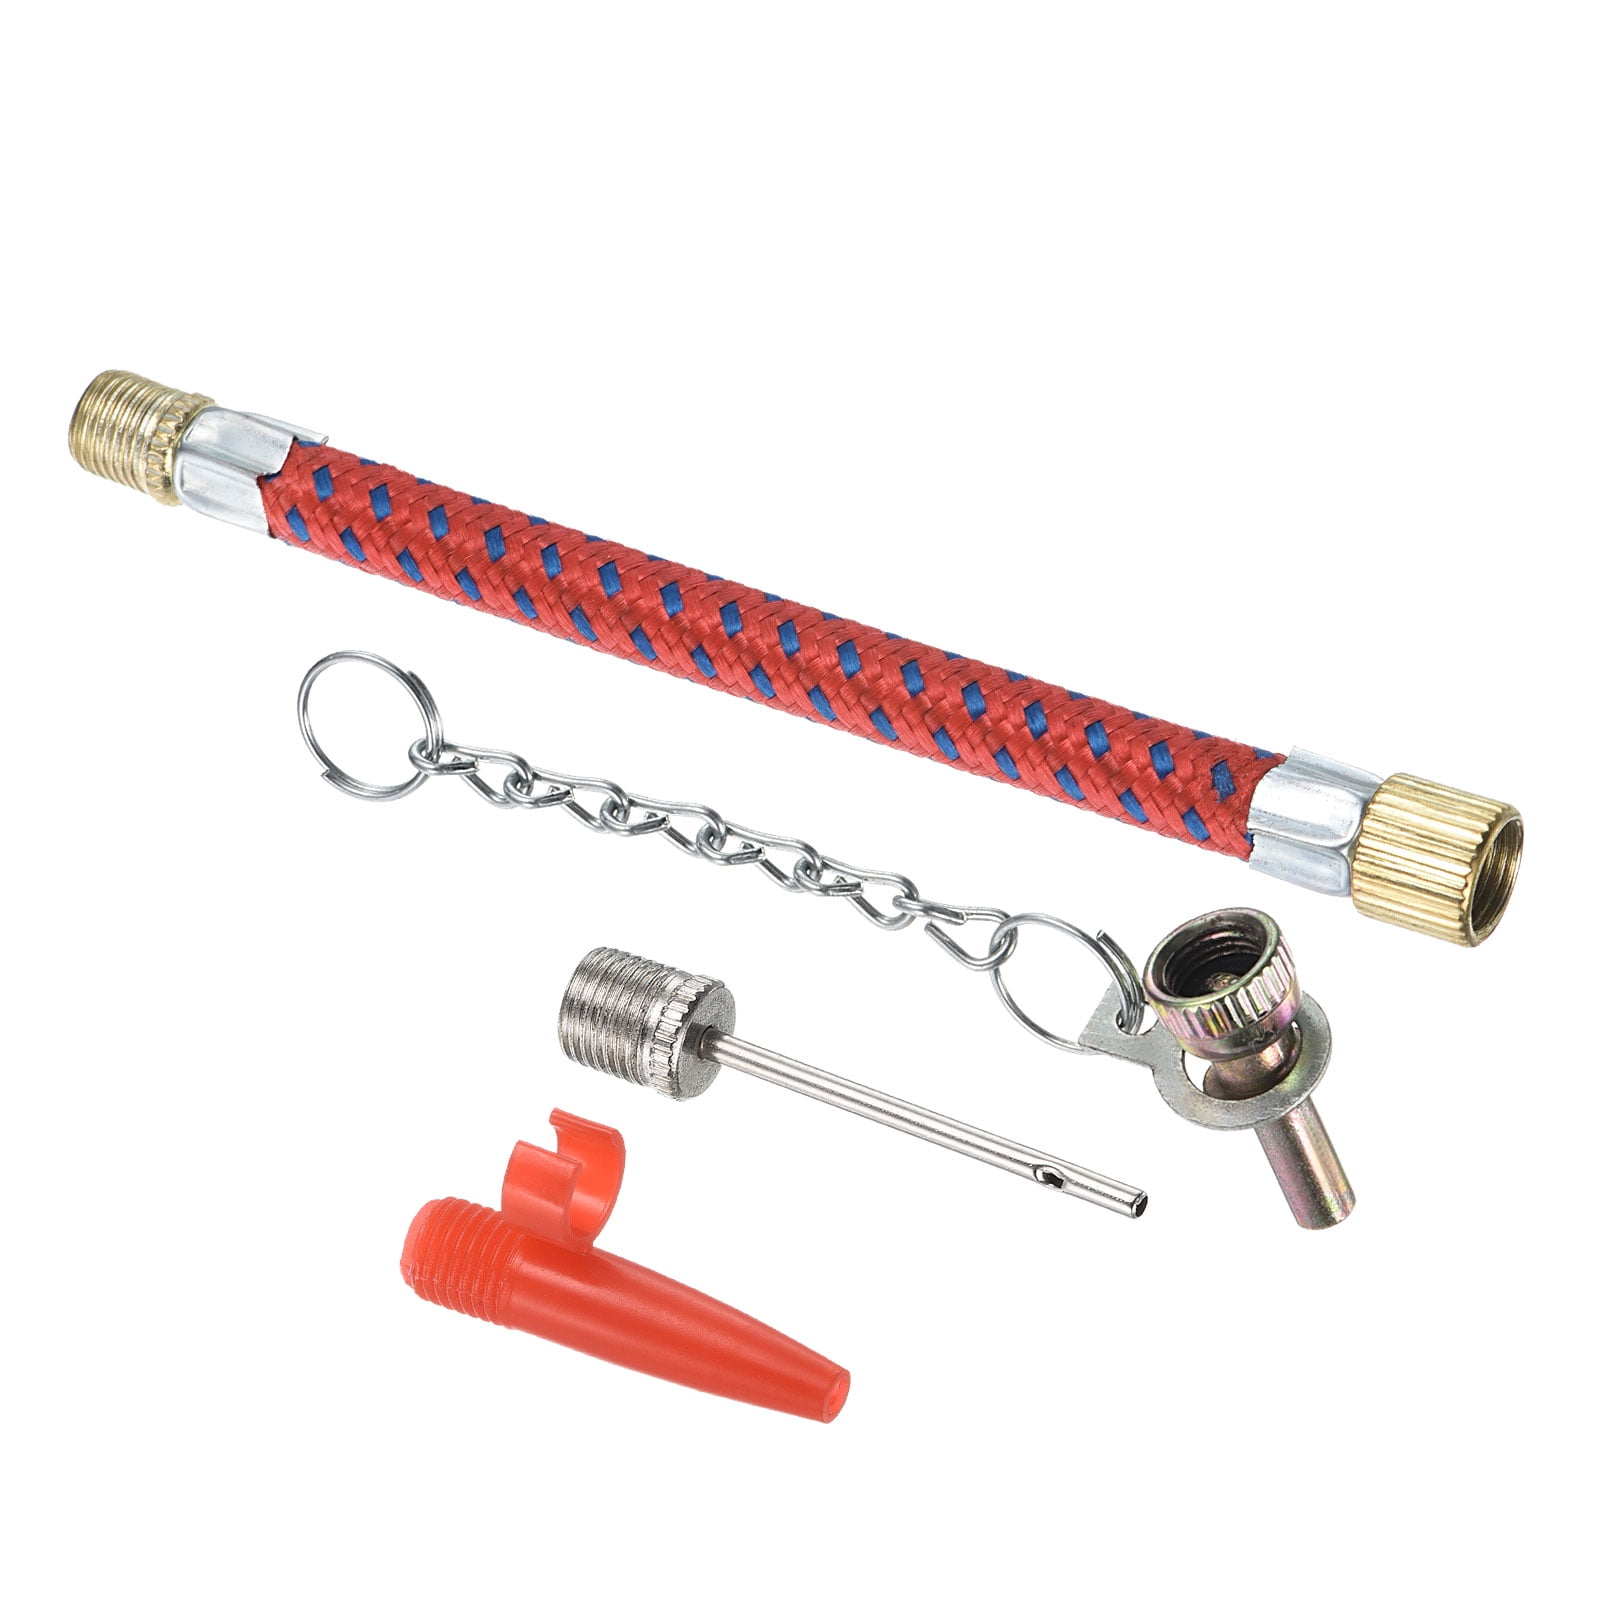 ETENWOLF Brass Ball Pump Needles with Storage Case, No Break Heavy Duty Air  Pump Needles for Balls, Stainless Steel Body